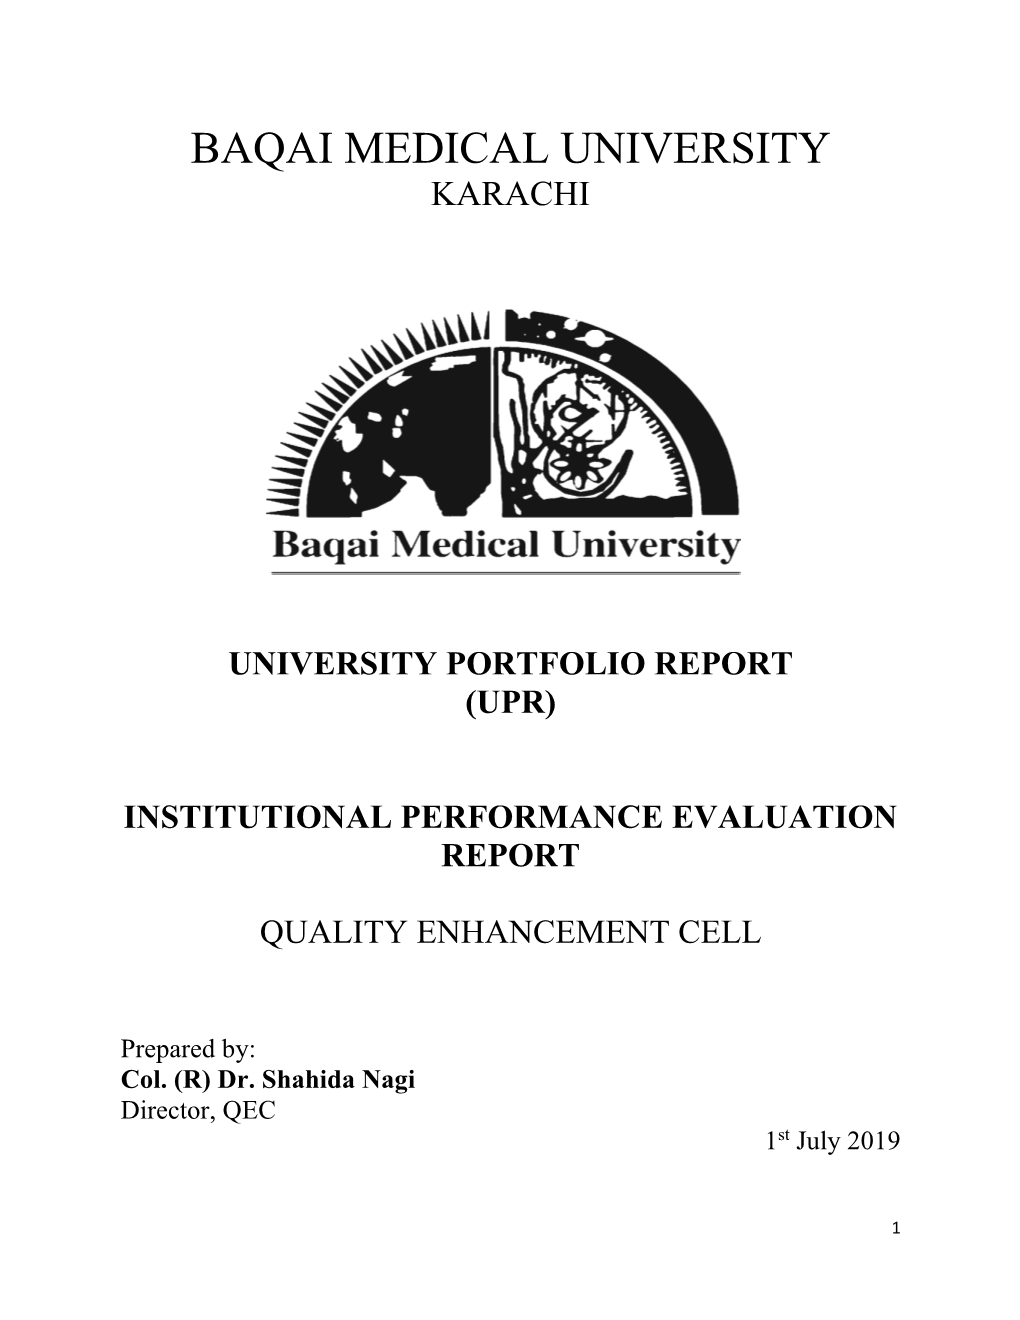 University Portfolio Report (Upr)